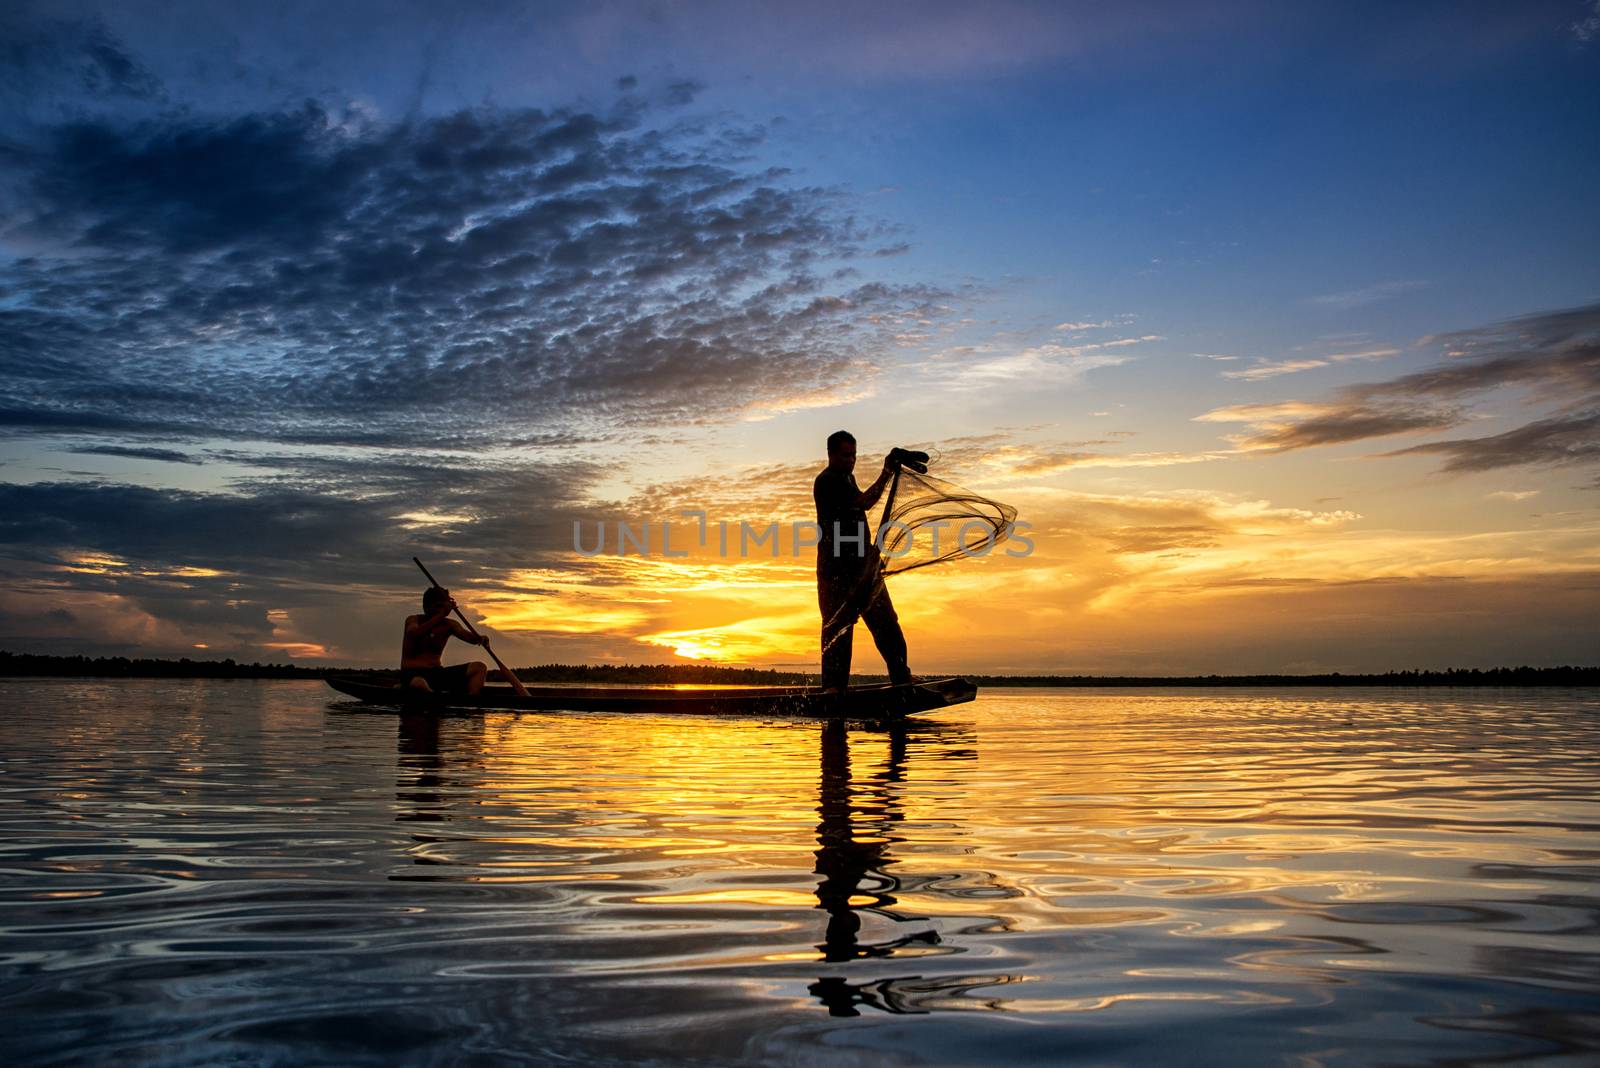 Silhouette of fish lift nets ,Wanonniwat ,Sakon Nakhon, Thailand